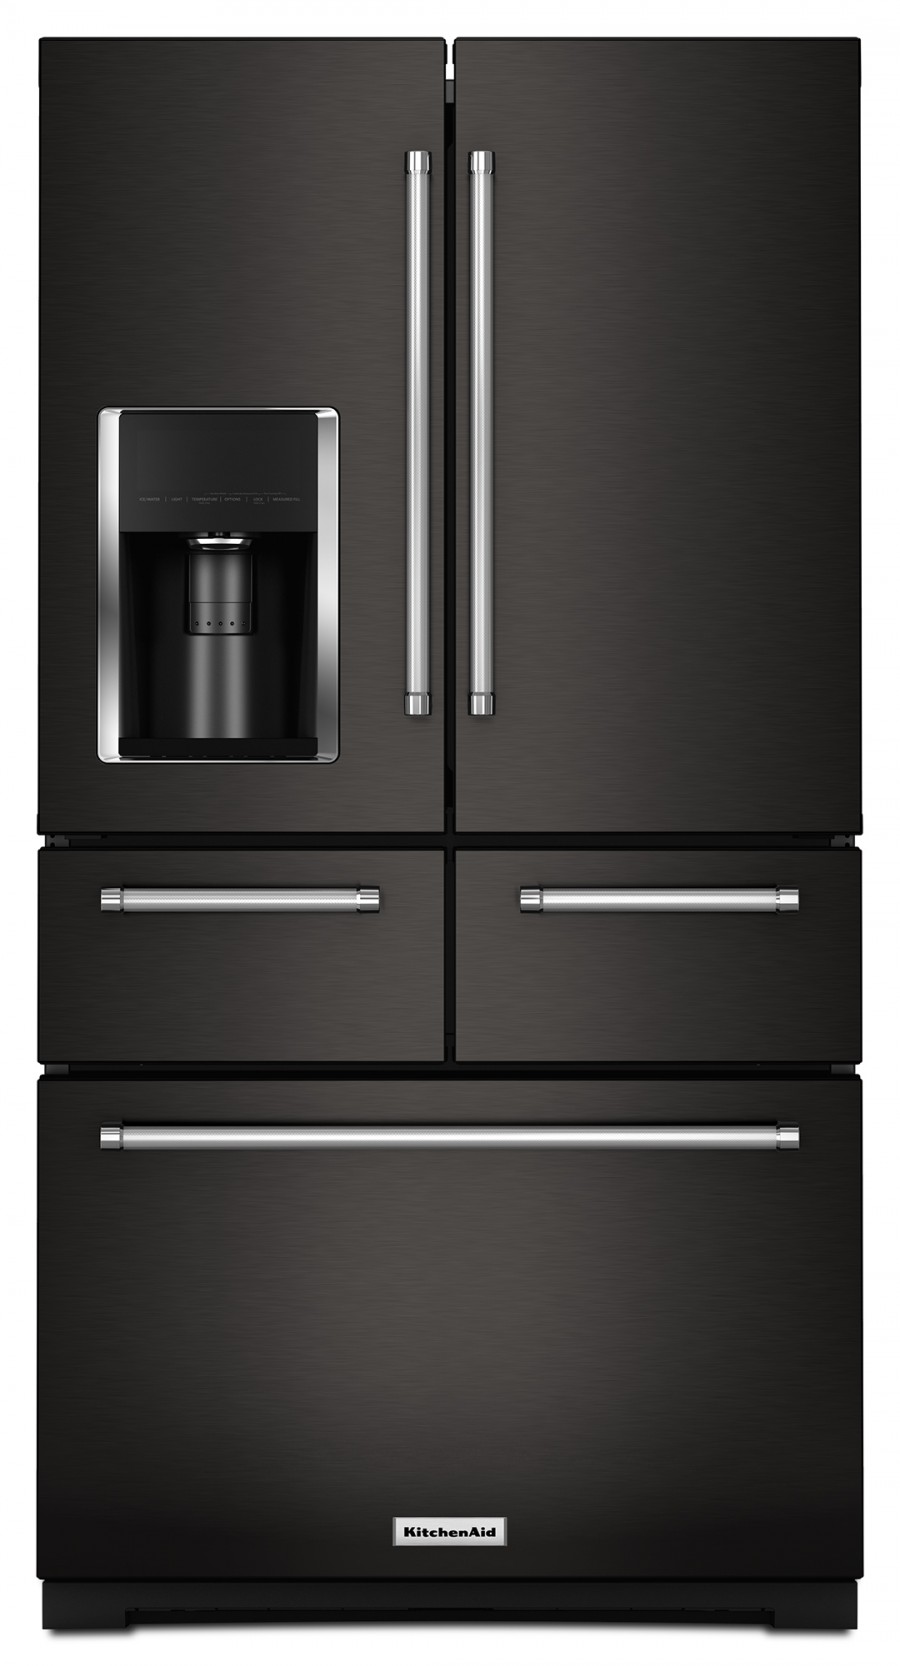 Kitchenaid appliances 2015